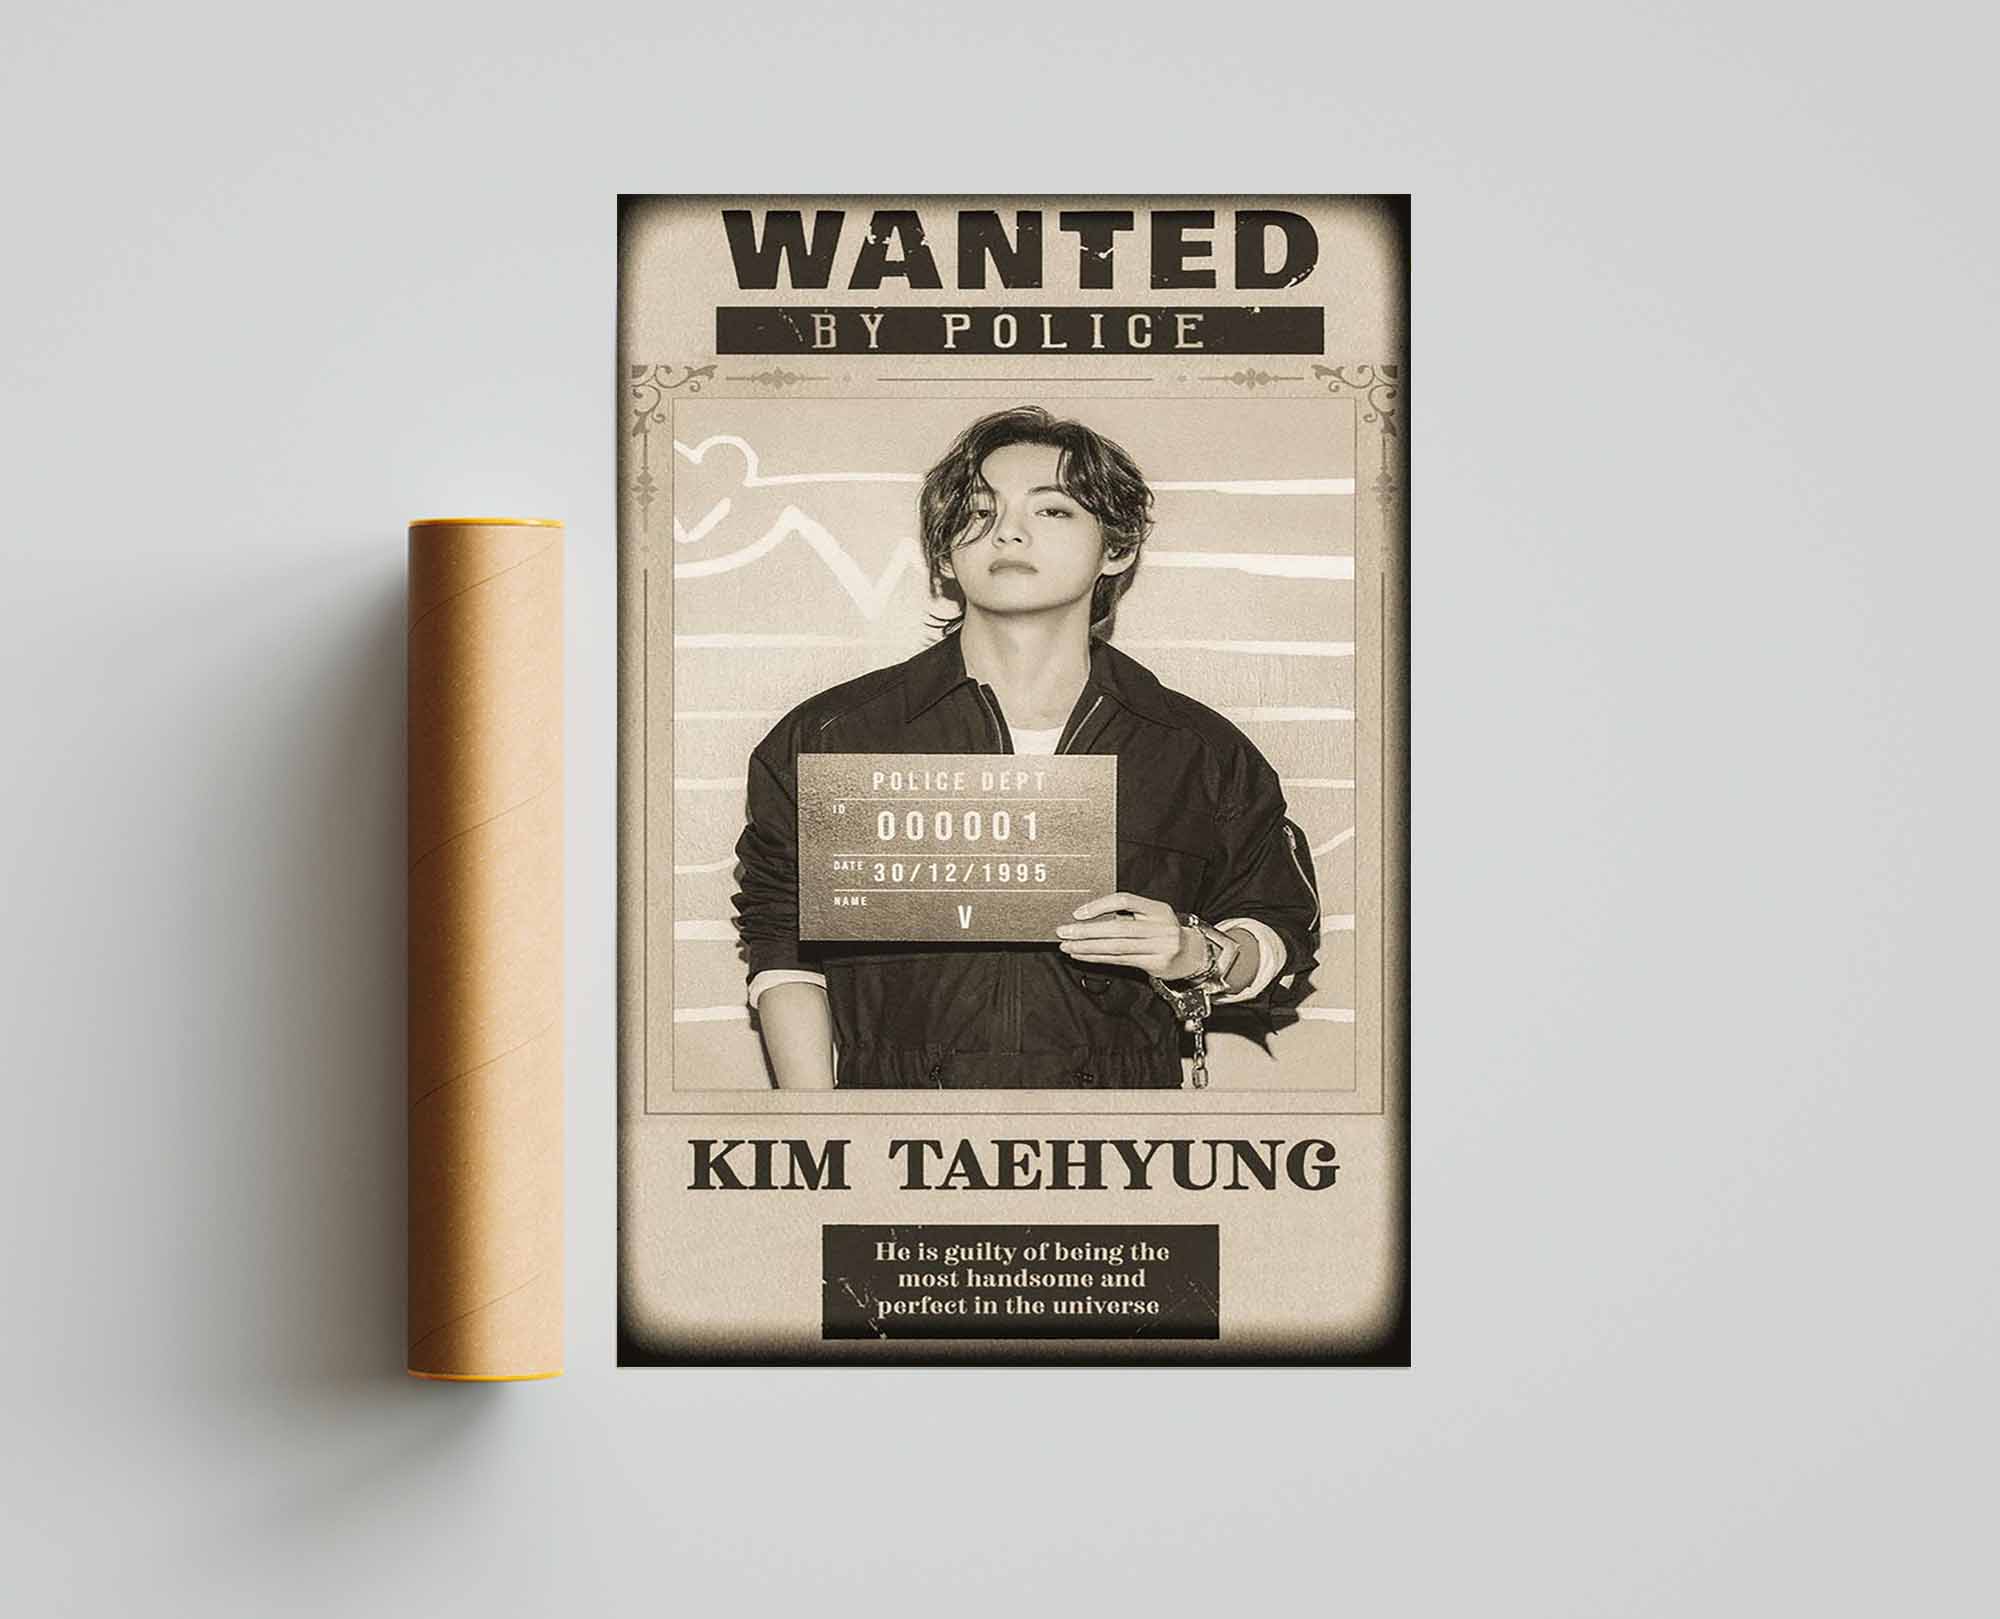 Fan Kim Poster, Kim Taehyung By Decor, BTS Fan Teahyung - Tea Wall Wanted Member Print, Police Printiment V Poster BTS BTS Poster, Gift, Hyung Art